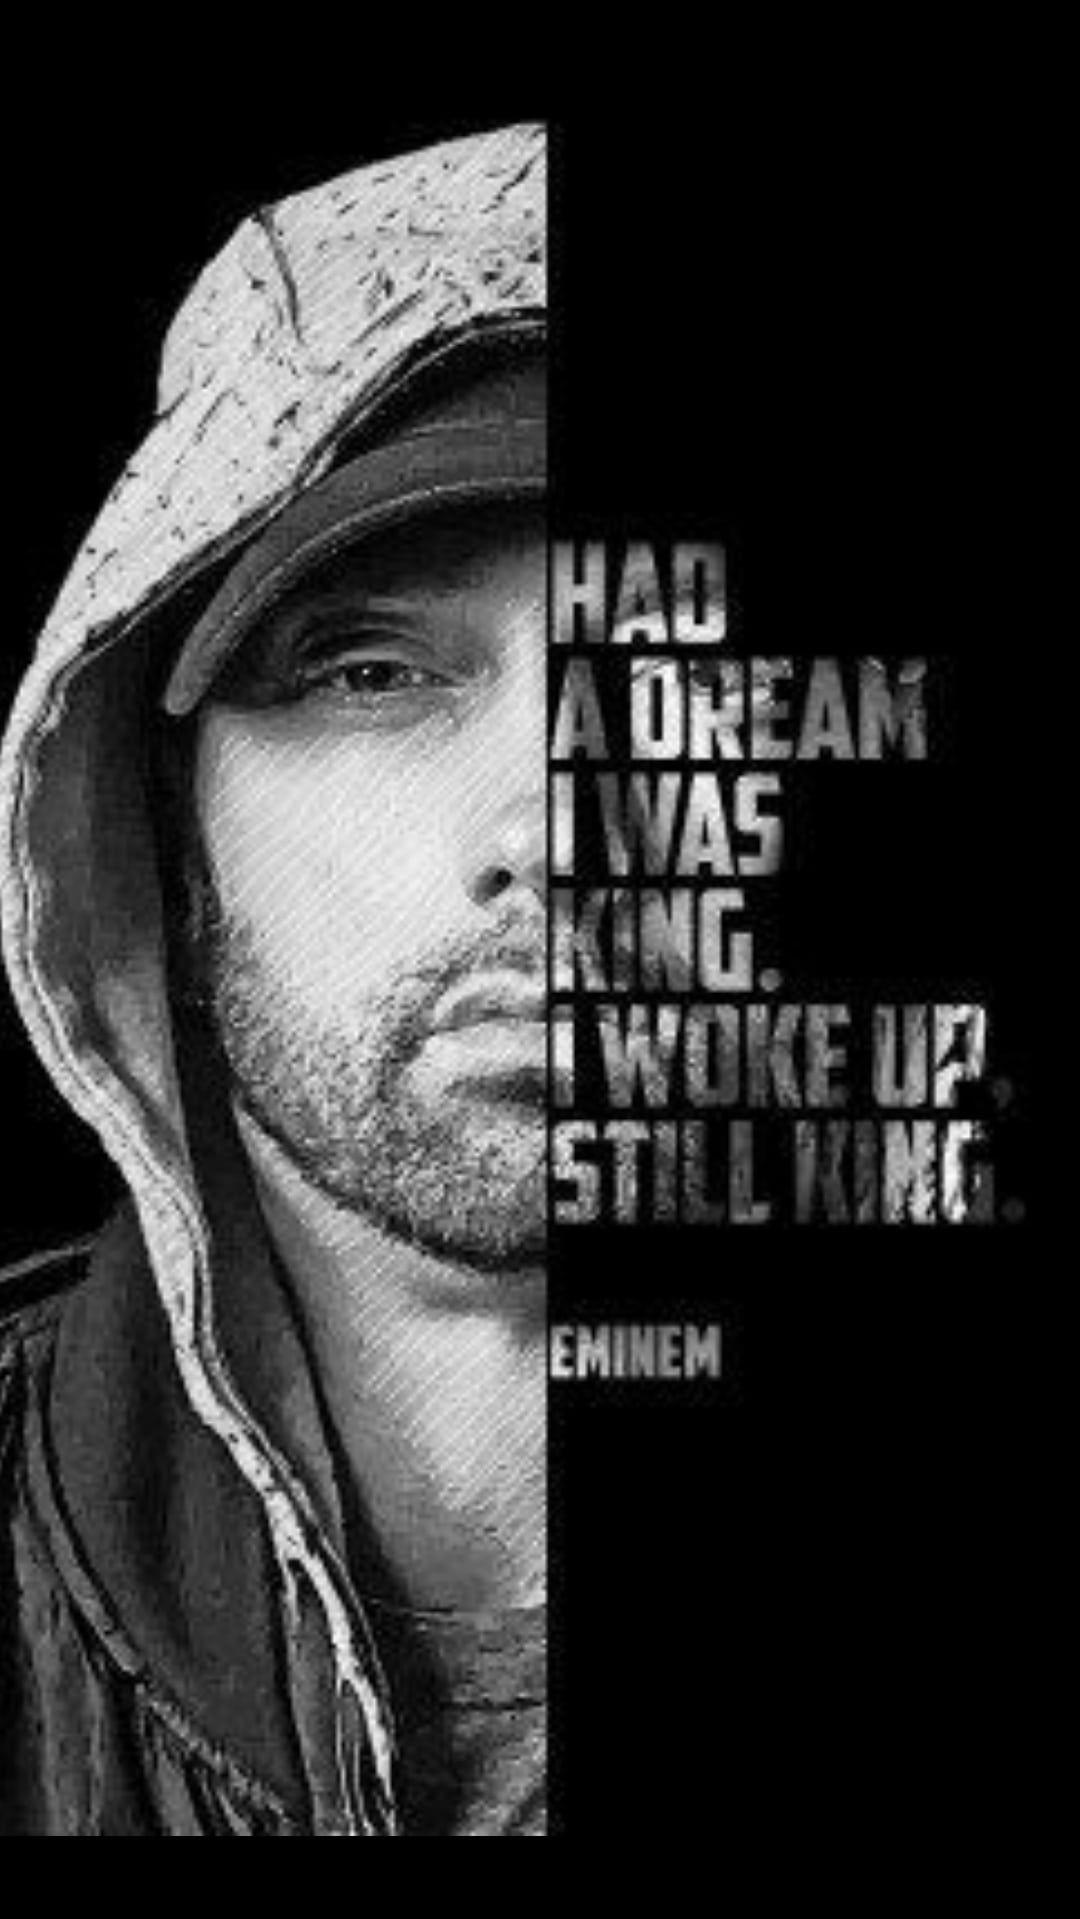 Eminem Wallpapers Top Best Eminem Wallpapers Download